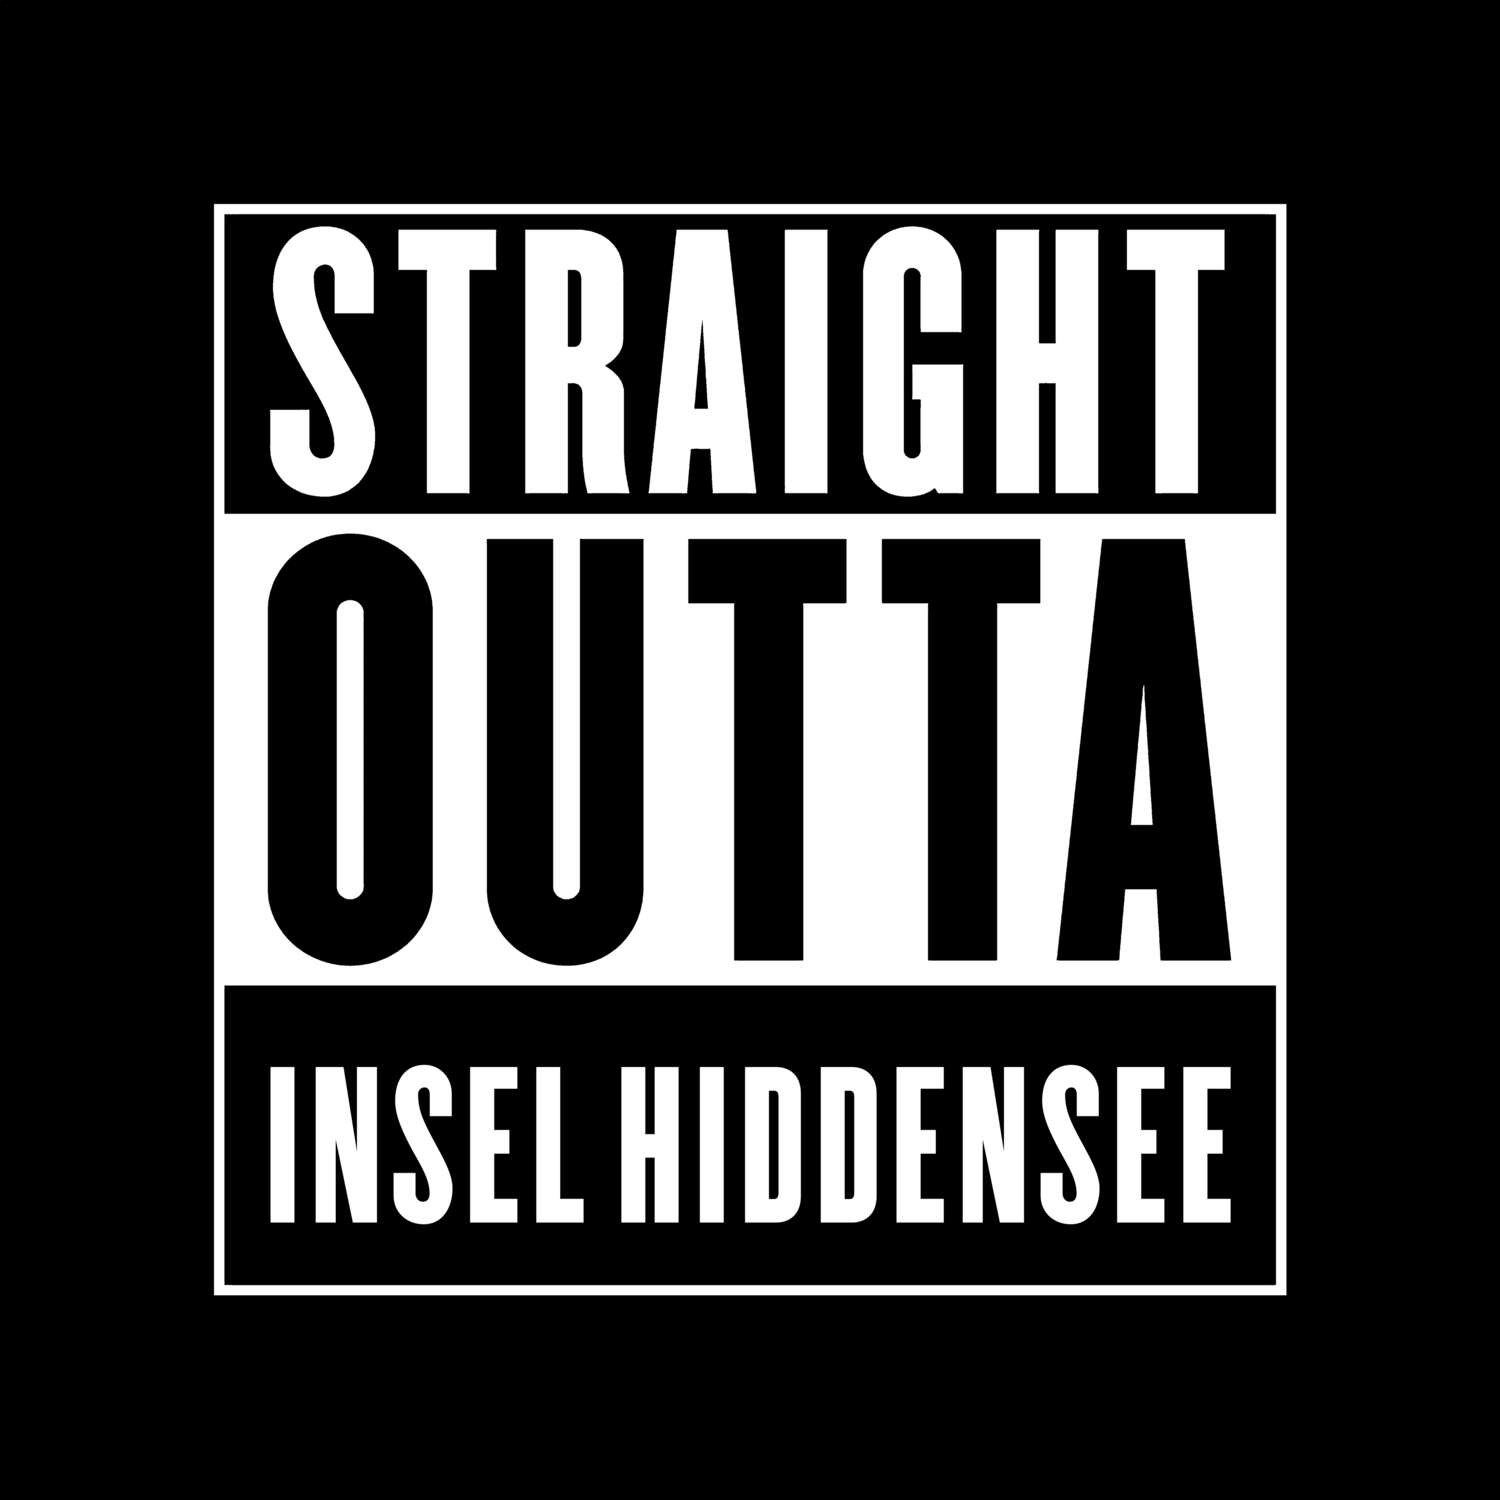 Insel Hiddensee T-Shirt »Straight Outta«